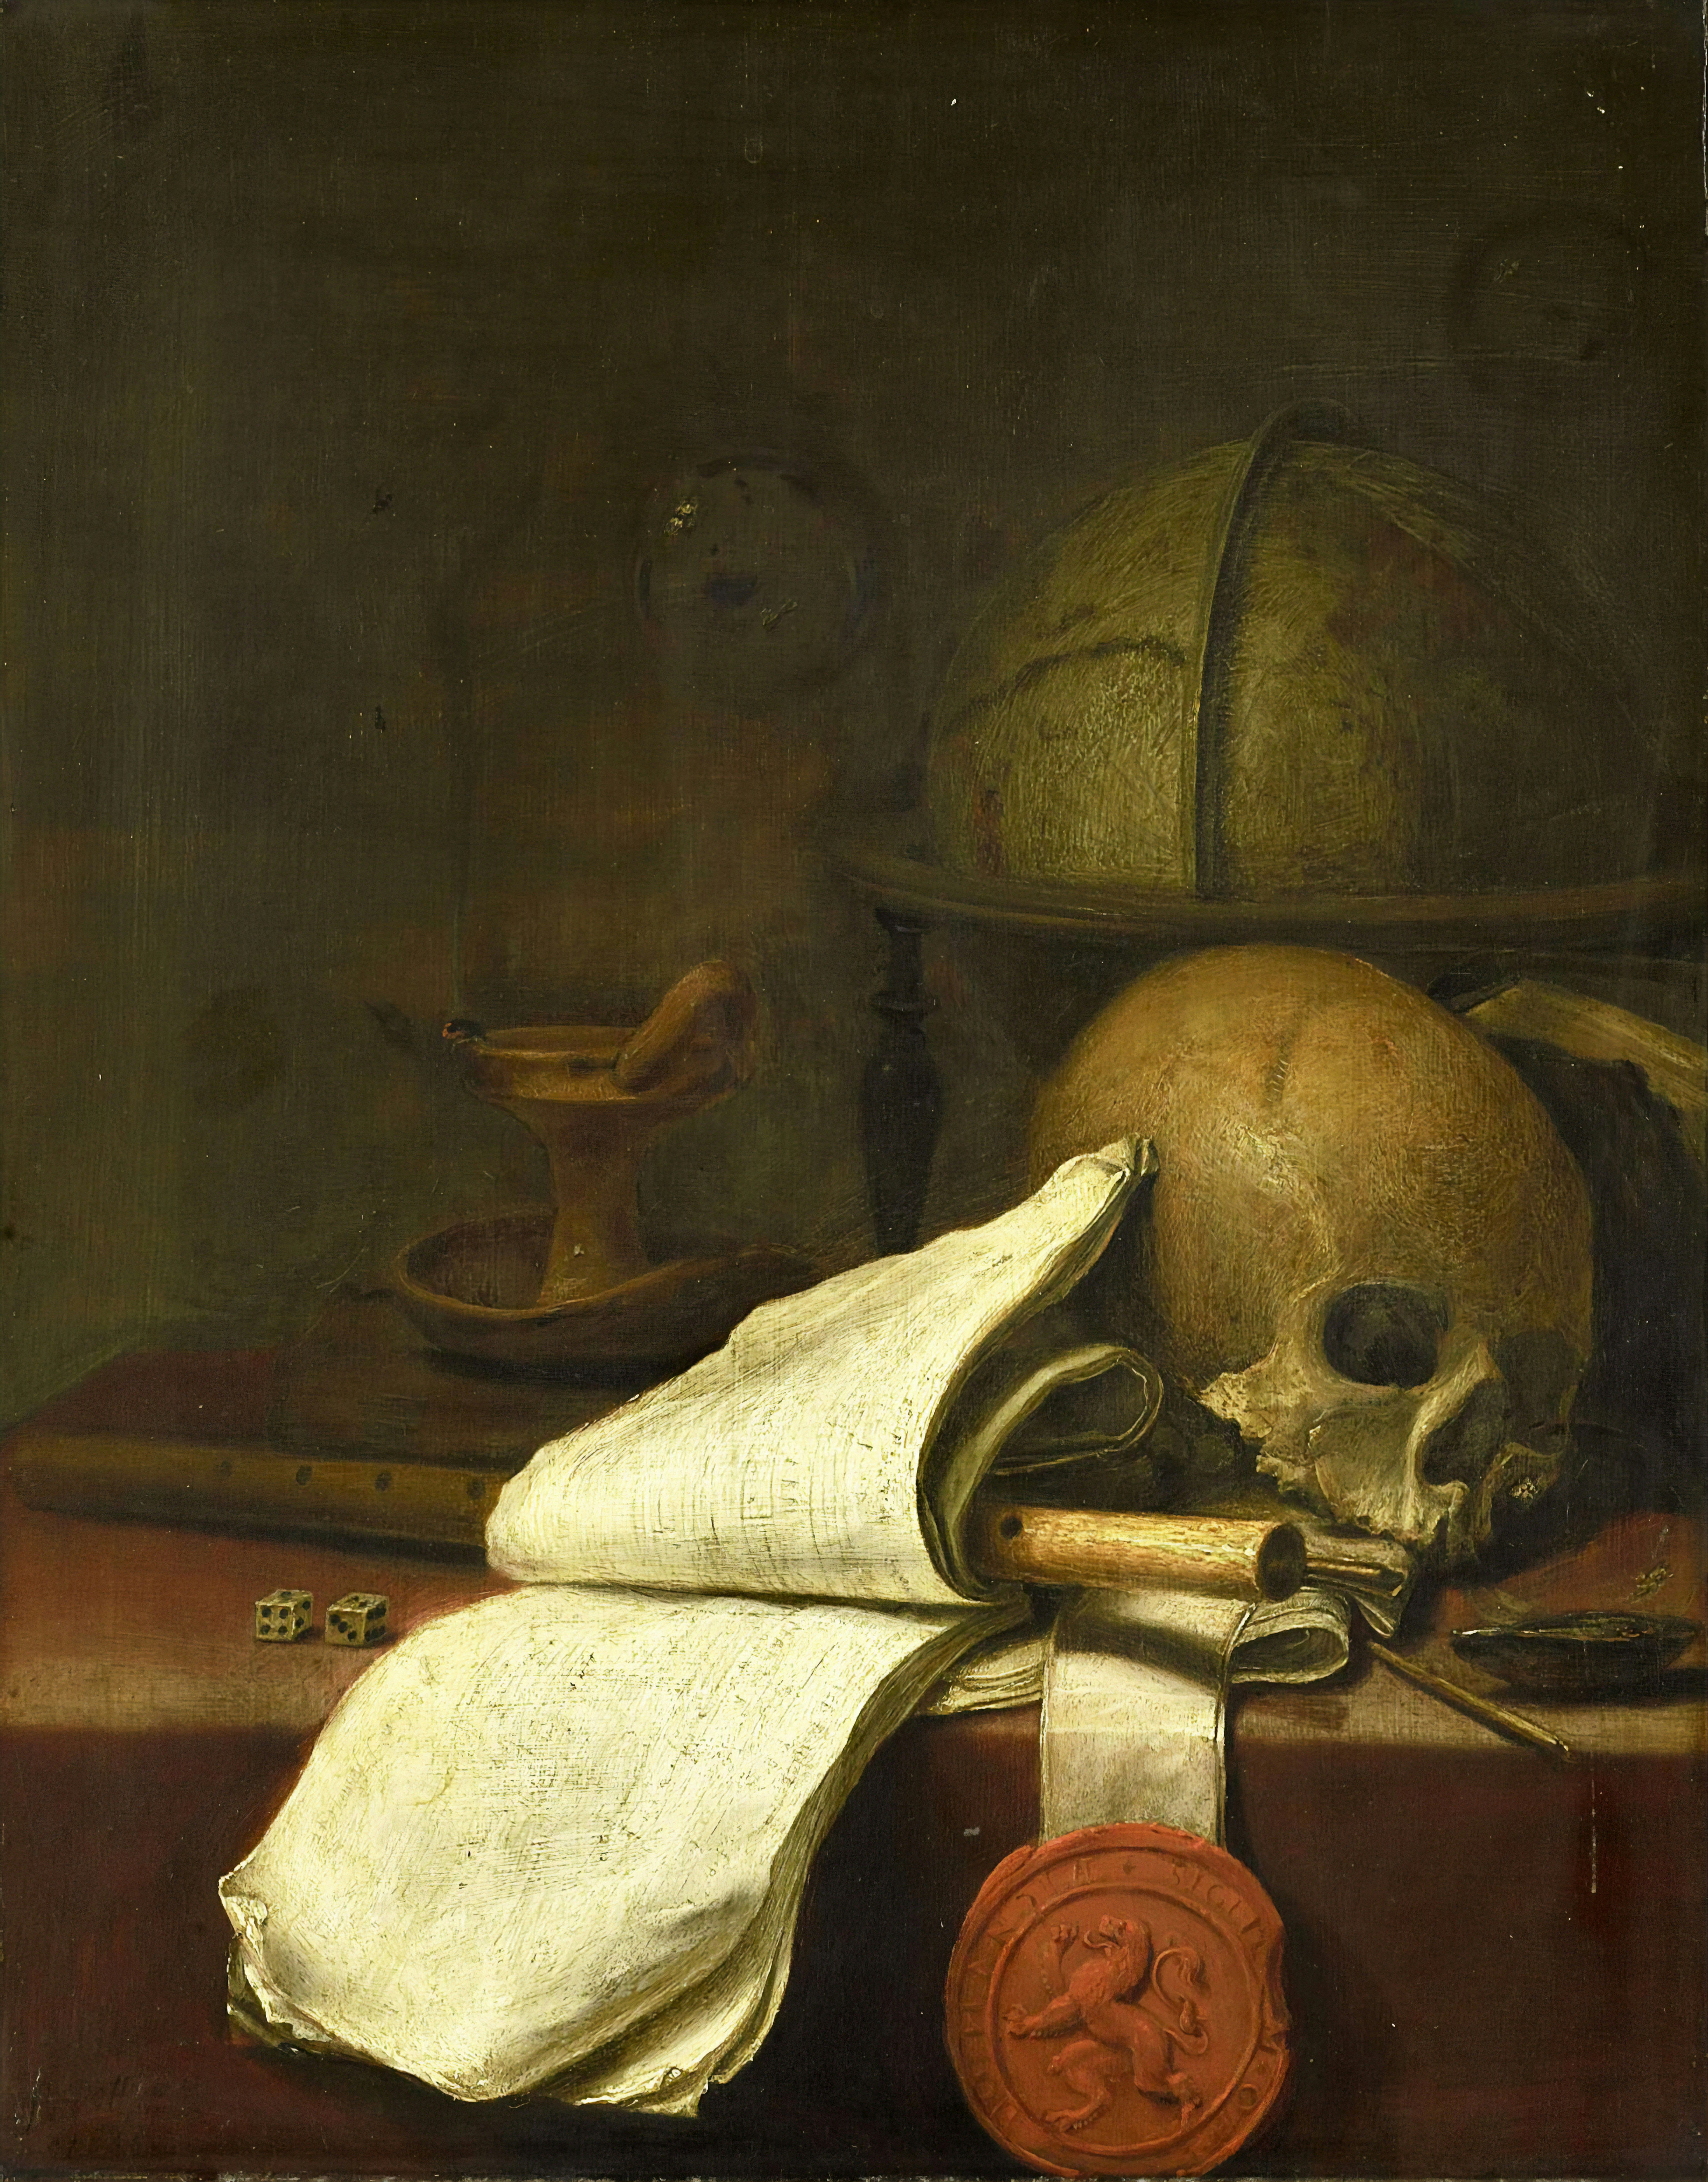 Title: Vanitas still life. Date: 1646. Institution: Rijksmuseum. Provider: Rijksmuseum. Providing Country: Netherlands. Public Domain